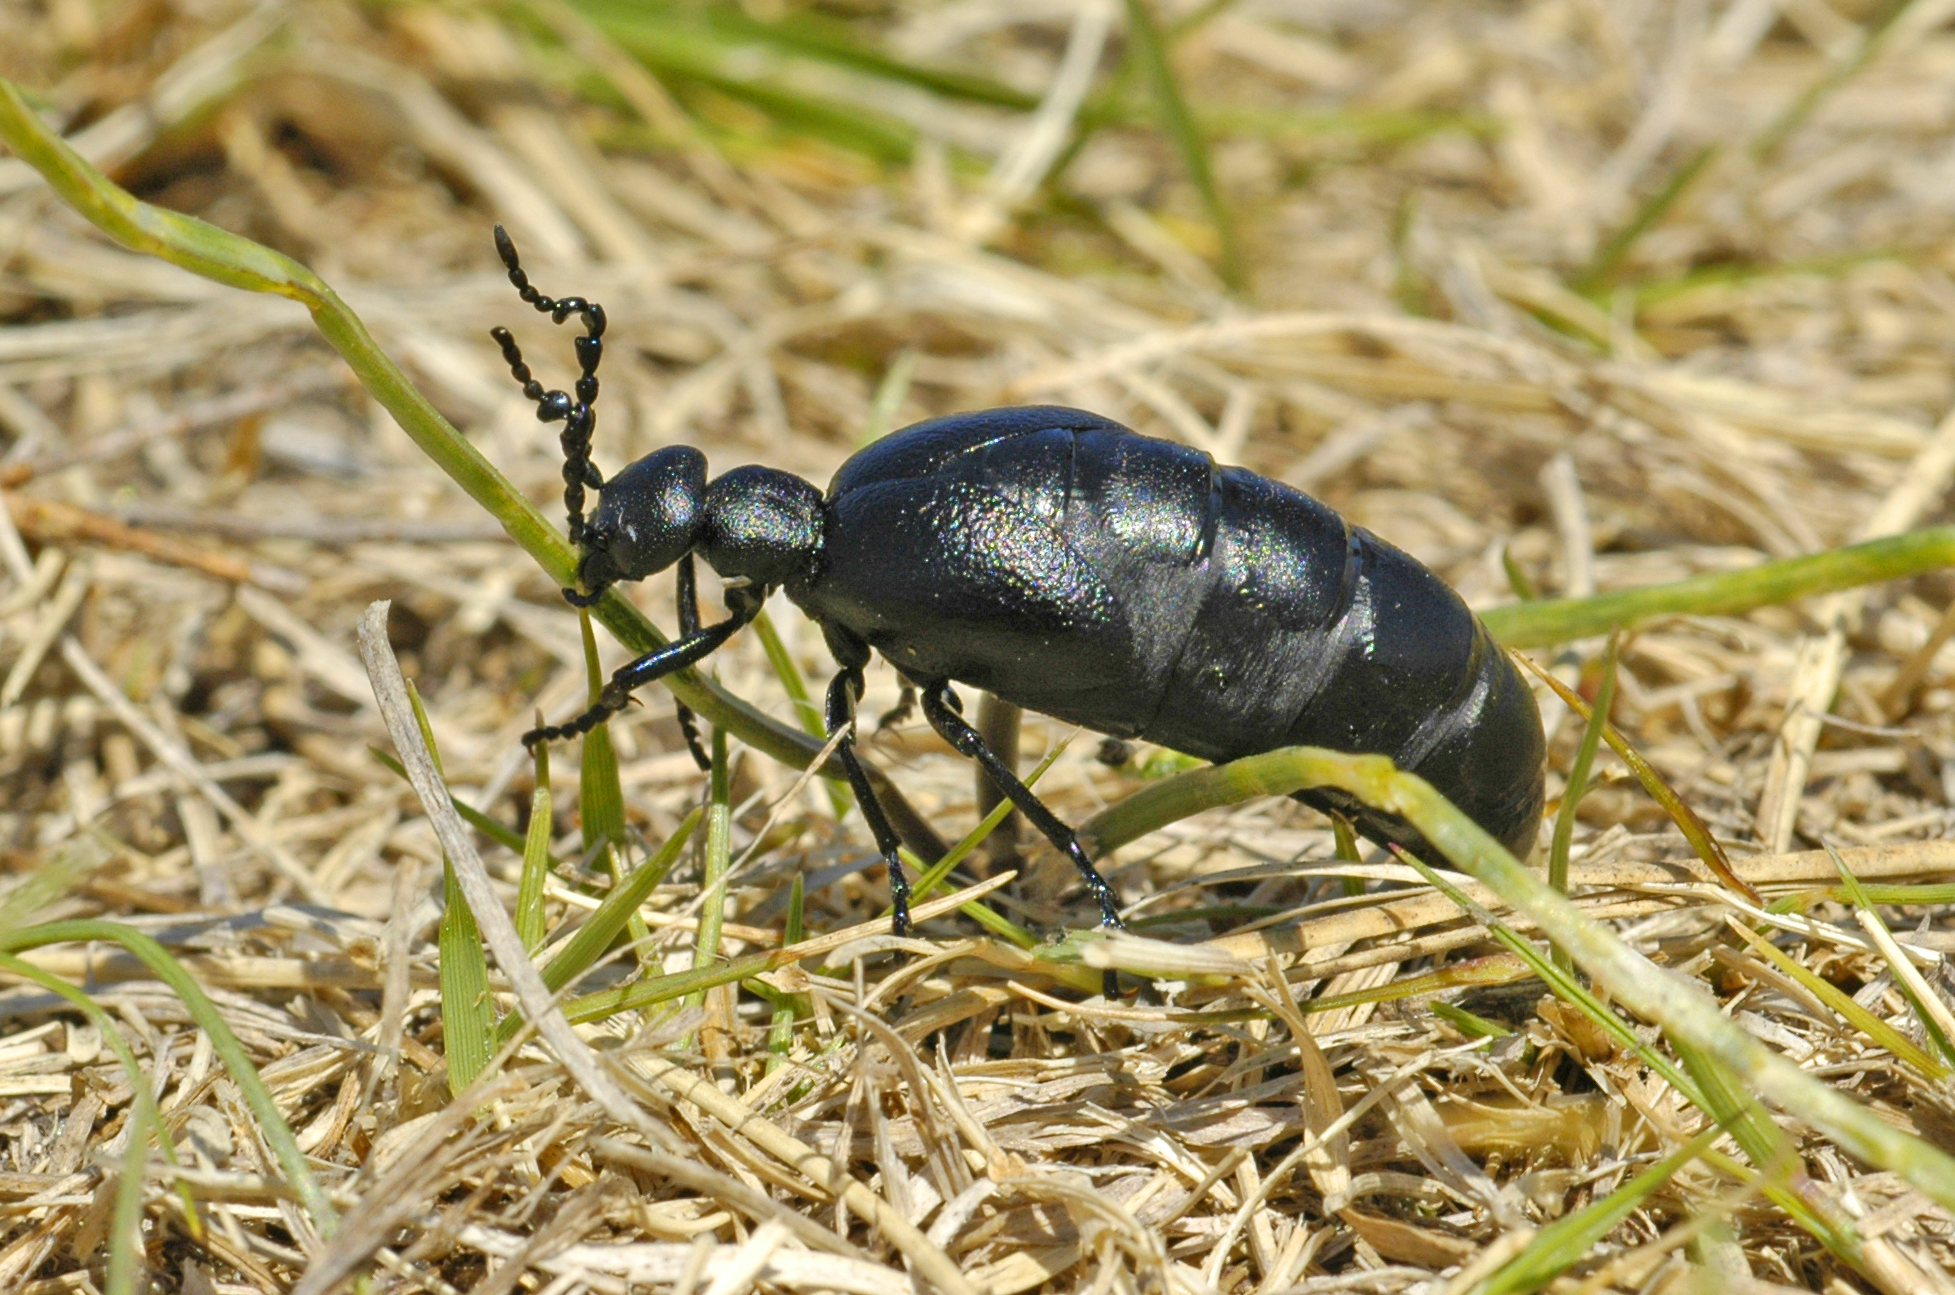 Morning Ag News, July 1, 2021: Blister beetles identified in western North Dakota